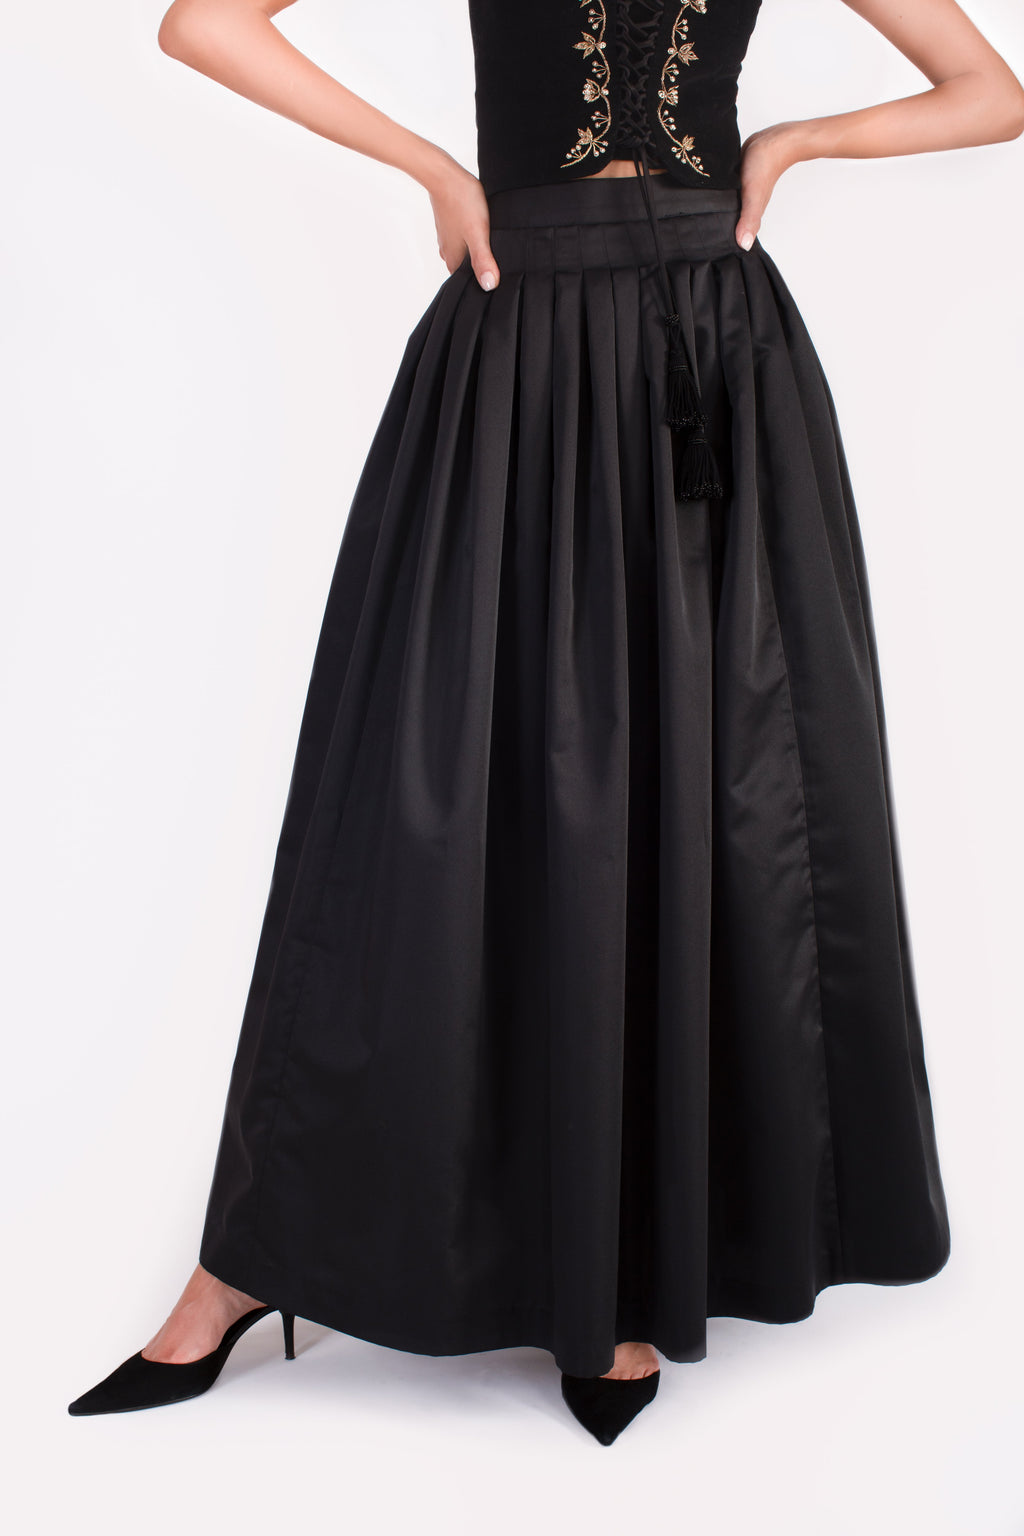 Dramatic Black Long Train Tulle Skirt | Tutu High Slit Party Gown Skir –  Okko Designs